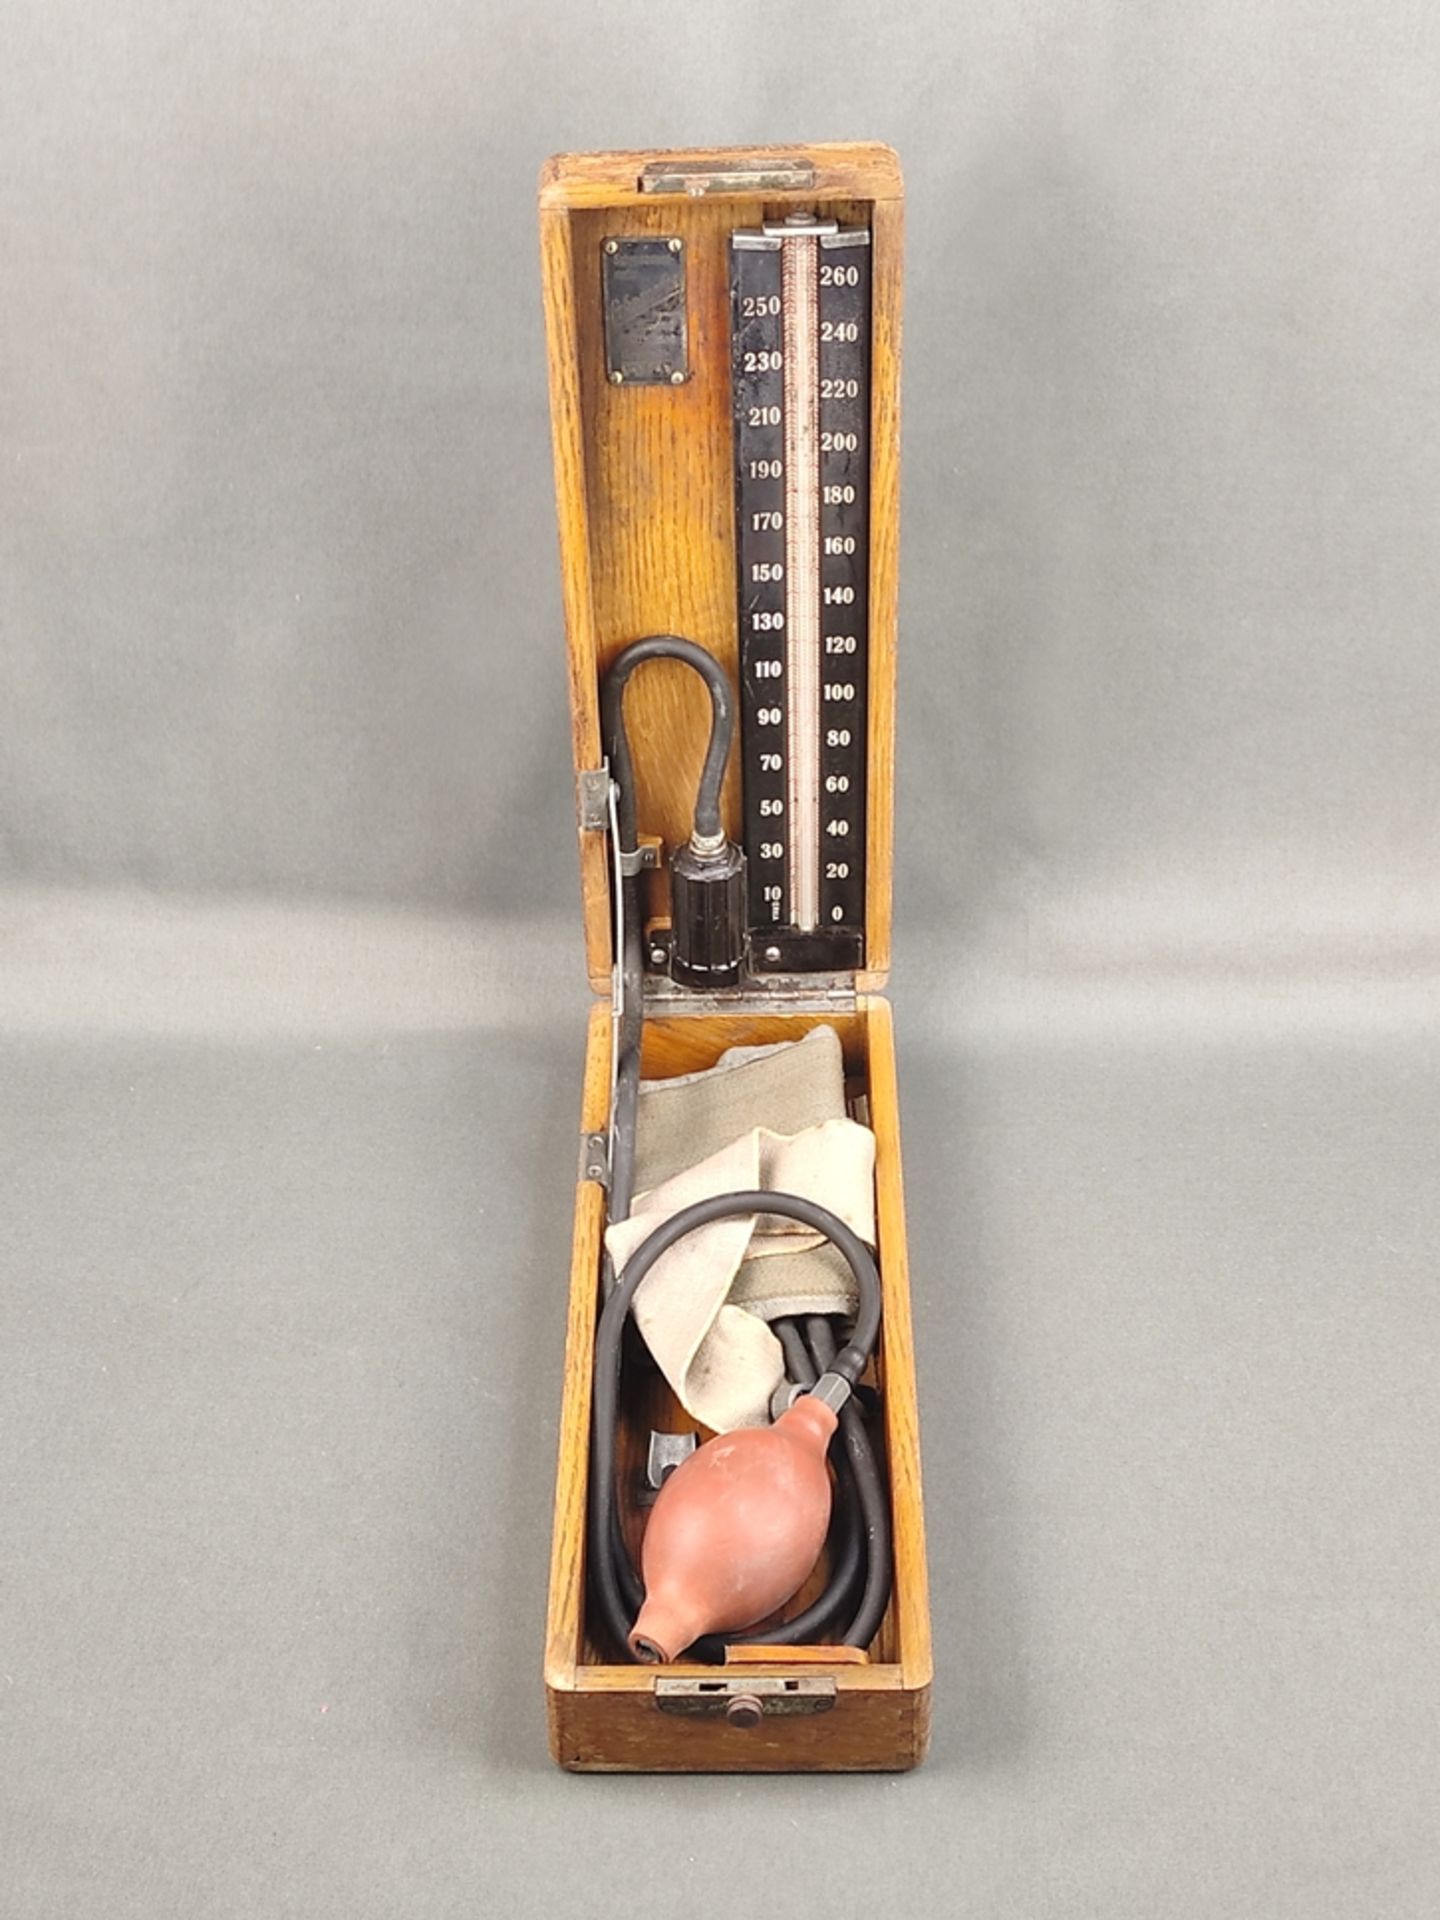 Historical blood pressure monitor/sphygmomanometer, Erkameter, brand Erka, Germany, ca. 1930s/40s, 